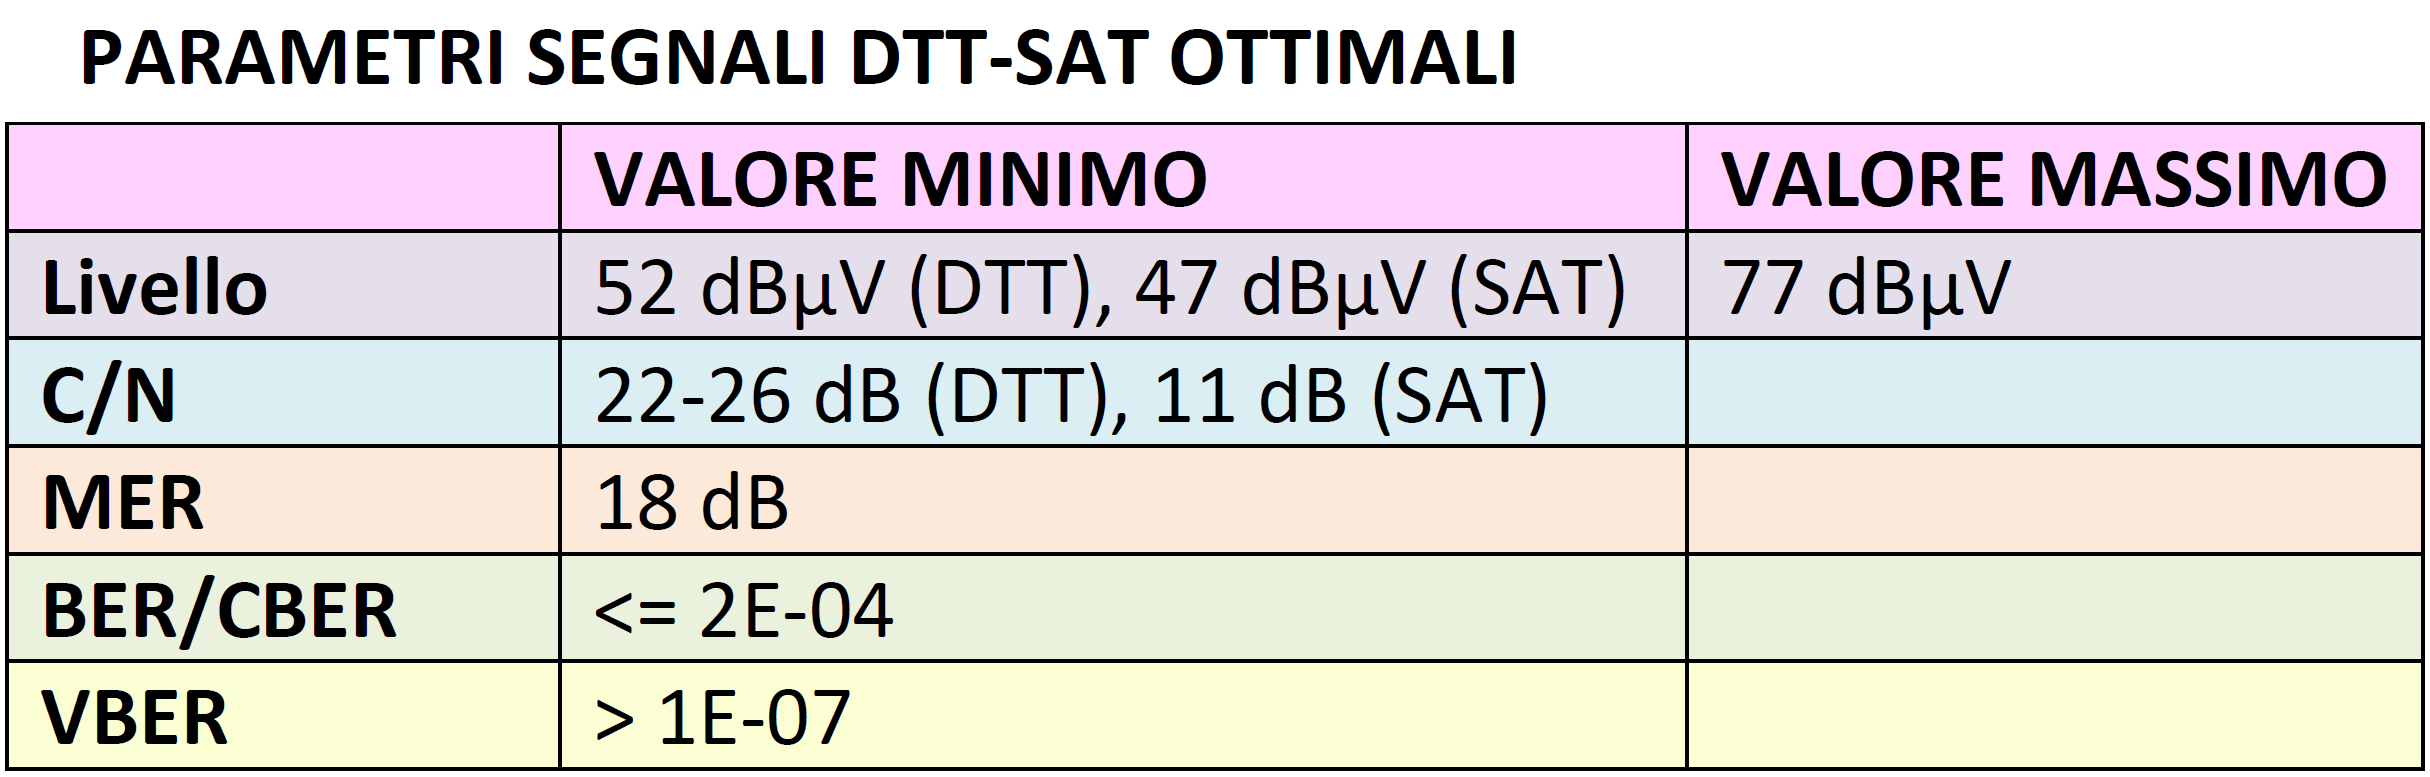 Tabella parametri segnali DTT SAT ottimali